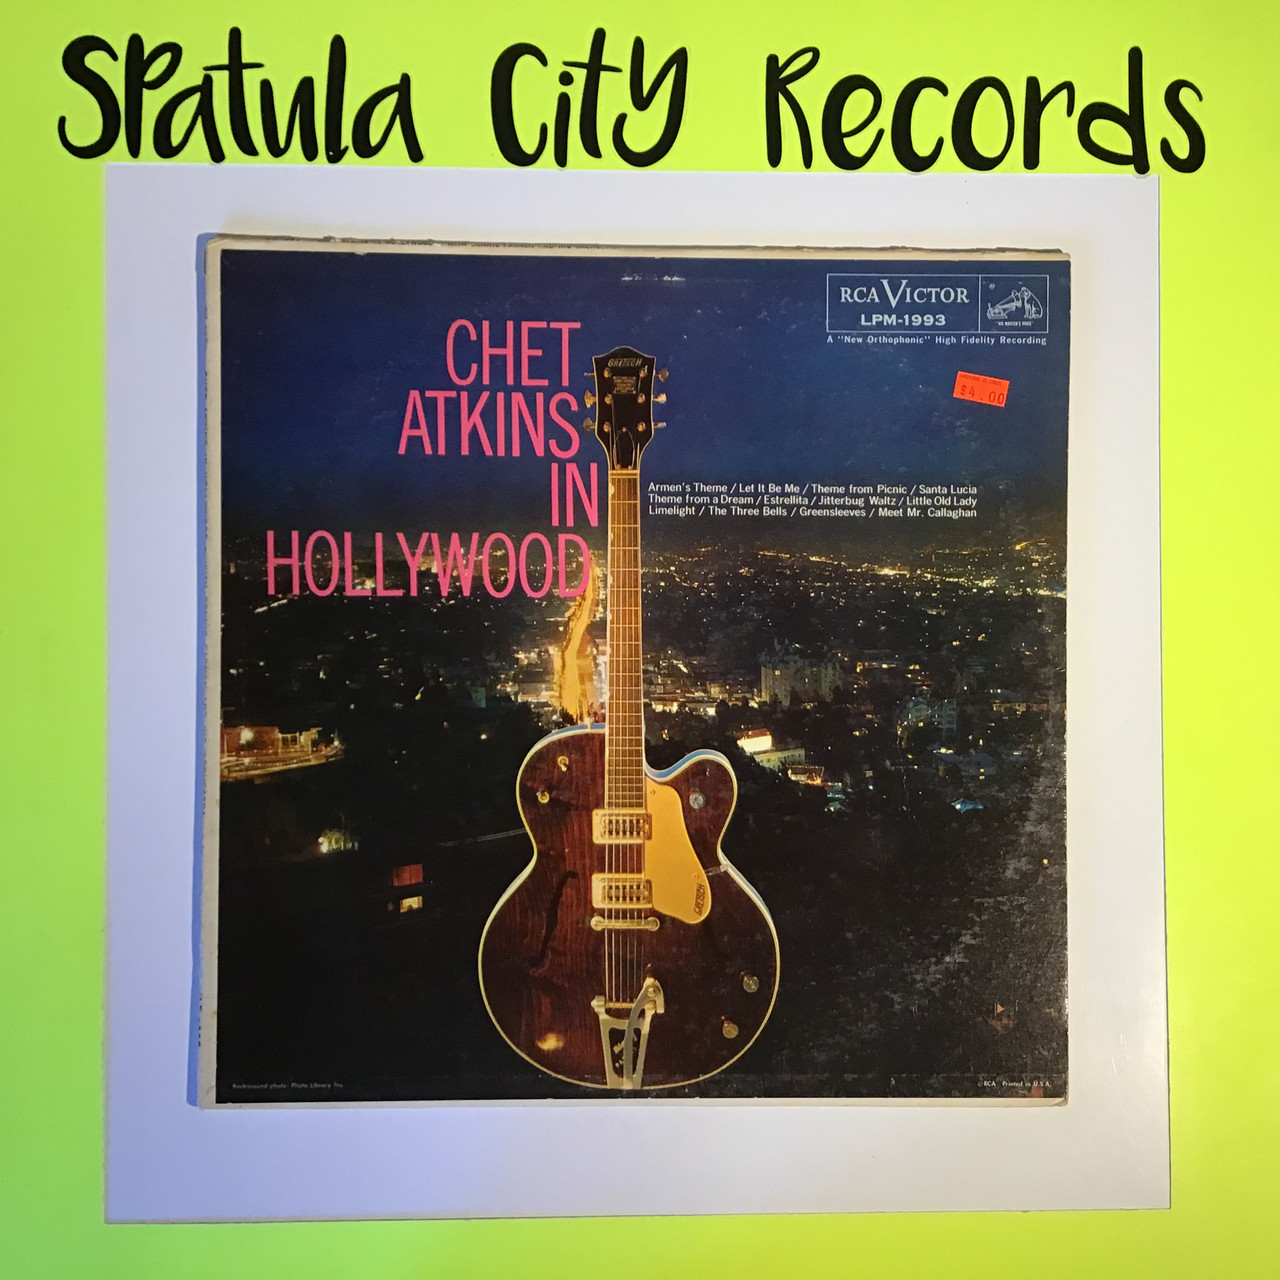 Chet Atkins - Chet Atkins in Hollywood - mono - vinyl record album LP